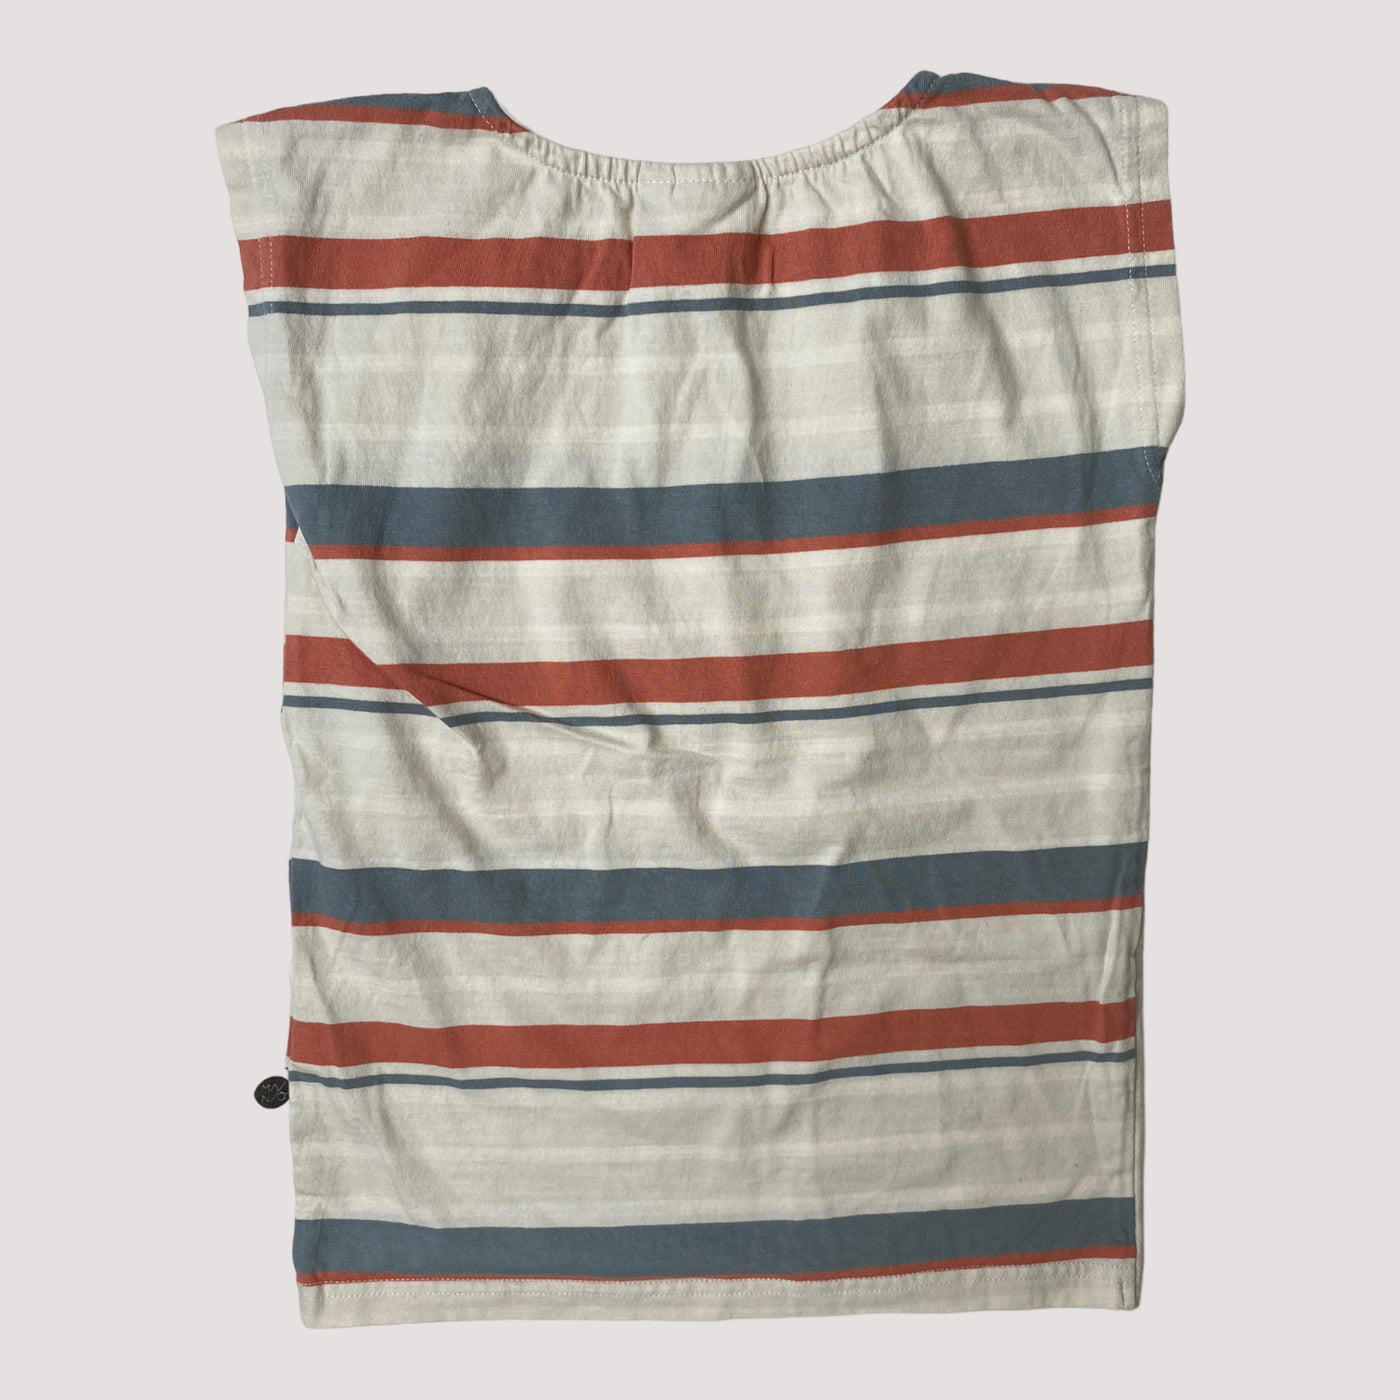 Mainio t-shirt, stripes | 122/128cm